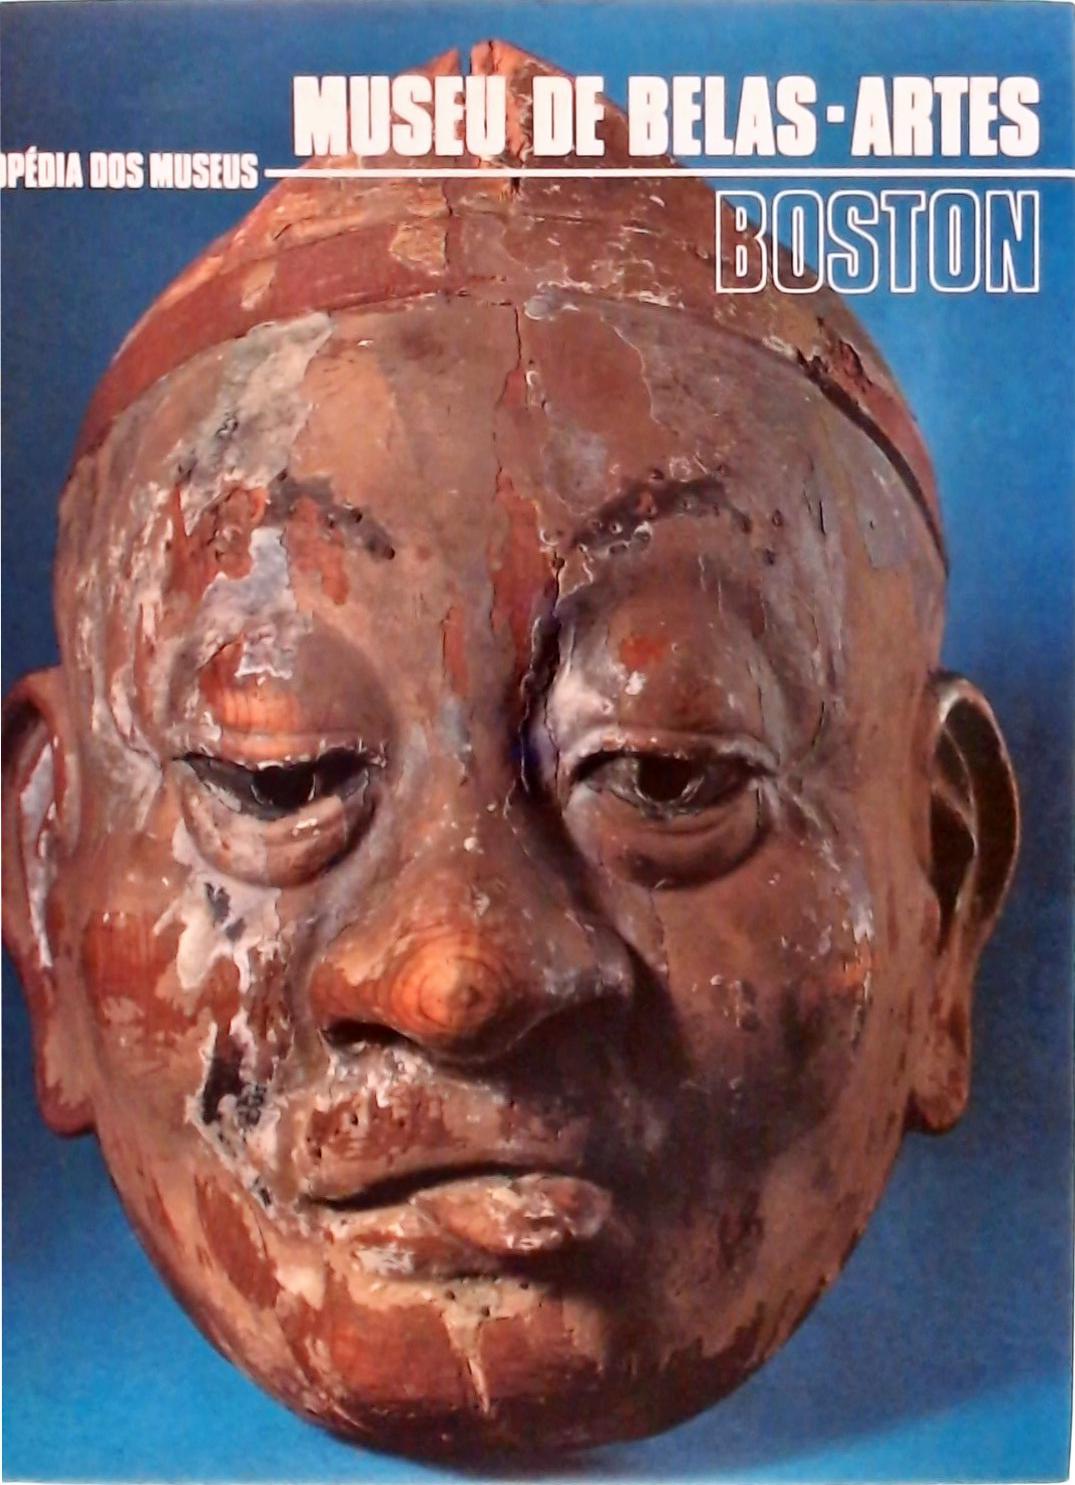 Enciclopédia dos Museus, Museu de Belas Artes Boston